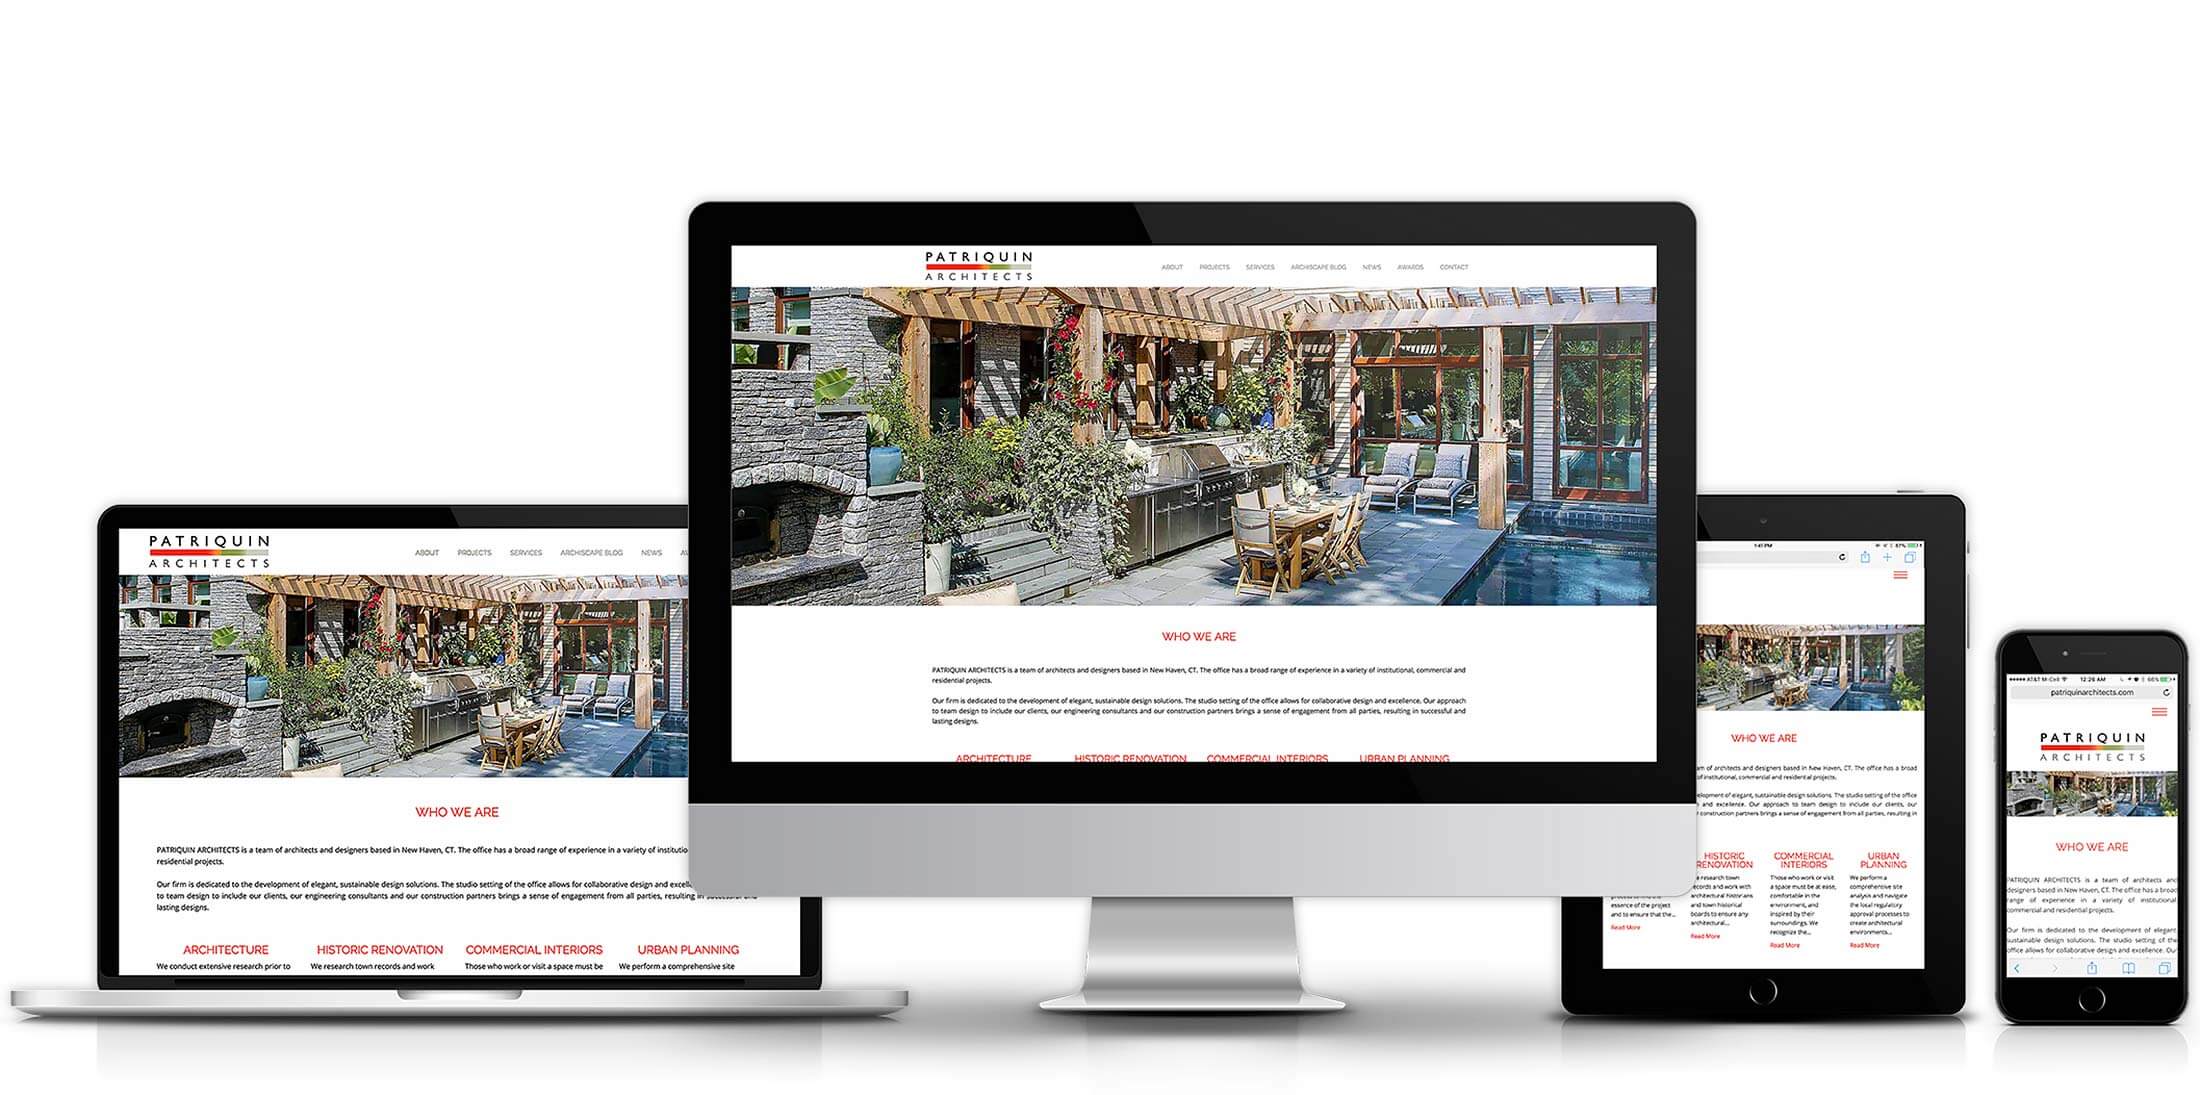 Patriquin Architects, Retina-Ready, Responsive Website, designed by CT Website Designer Margaret E. Tehan for Margaret's Folly